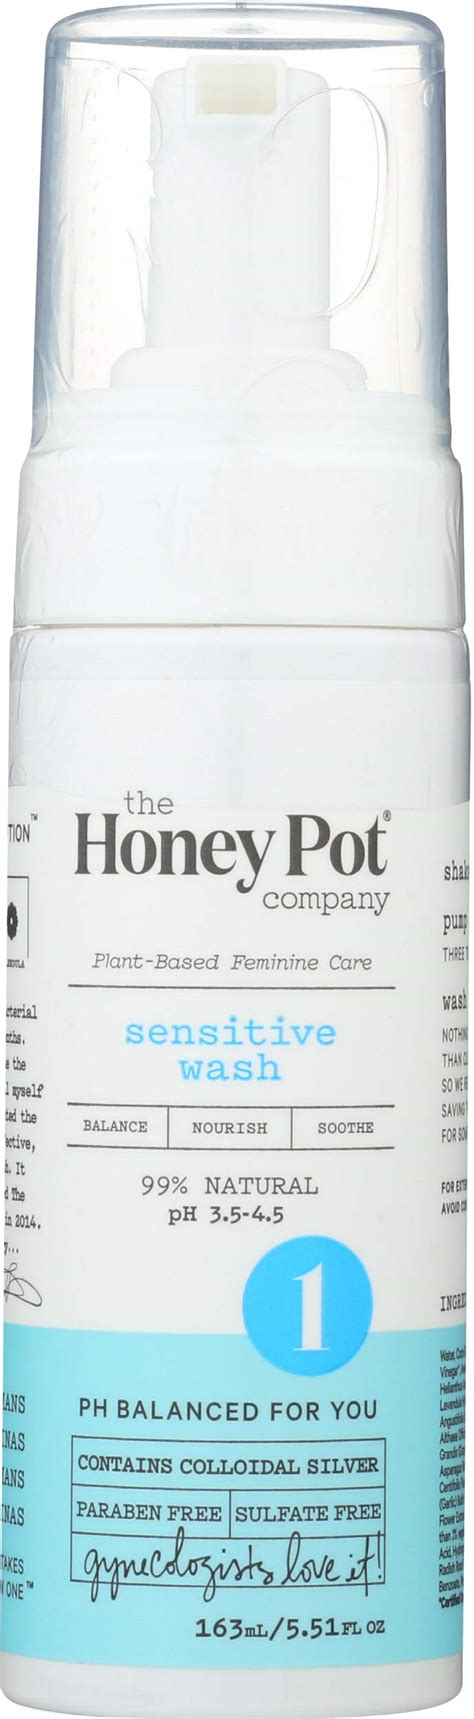 The Honey Pot Company Sensitive Wash Herbal Infused Feminine Hygiene Natural Wash For